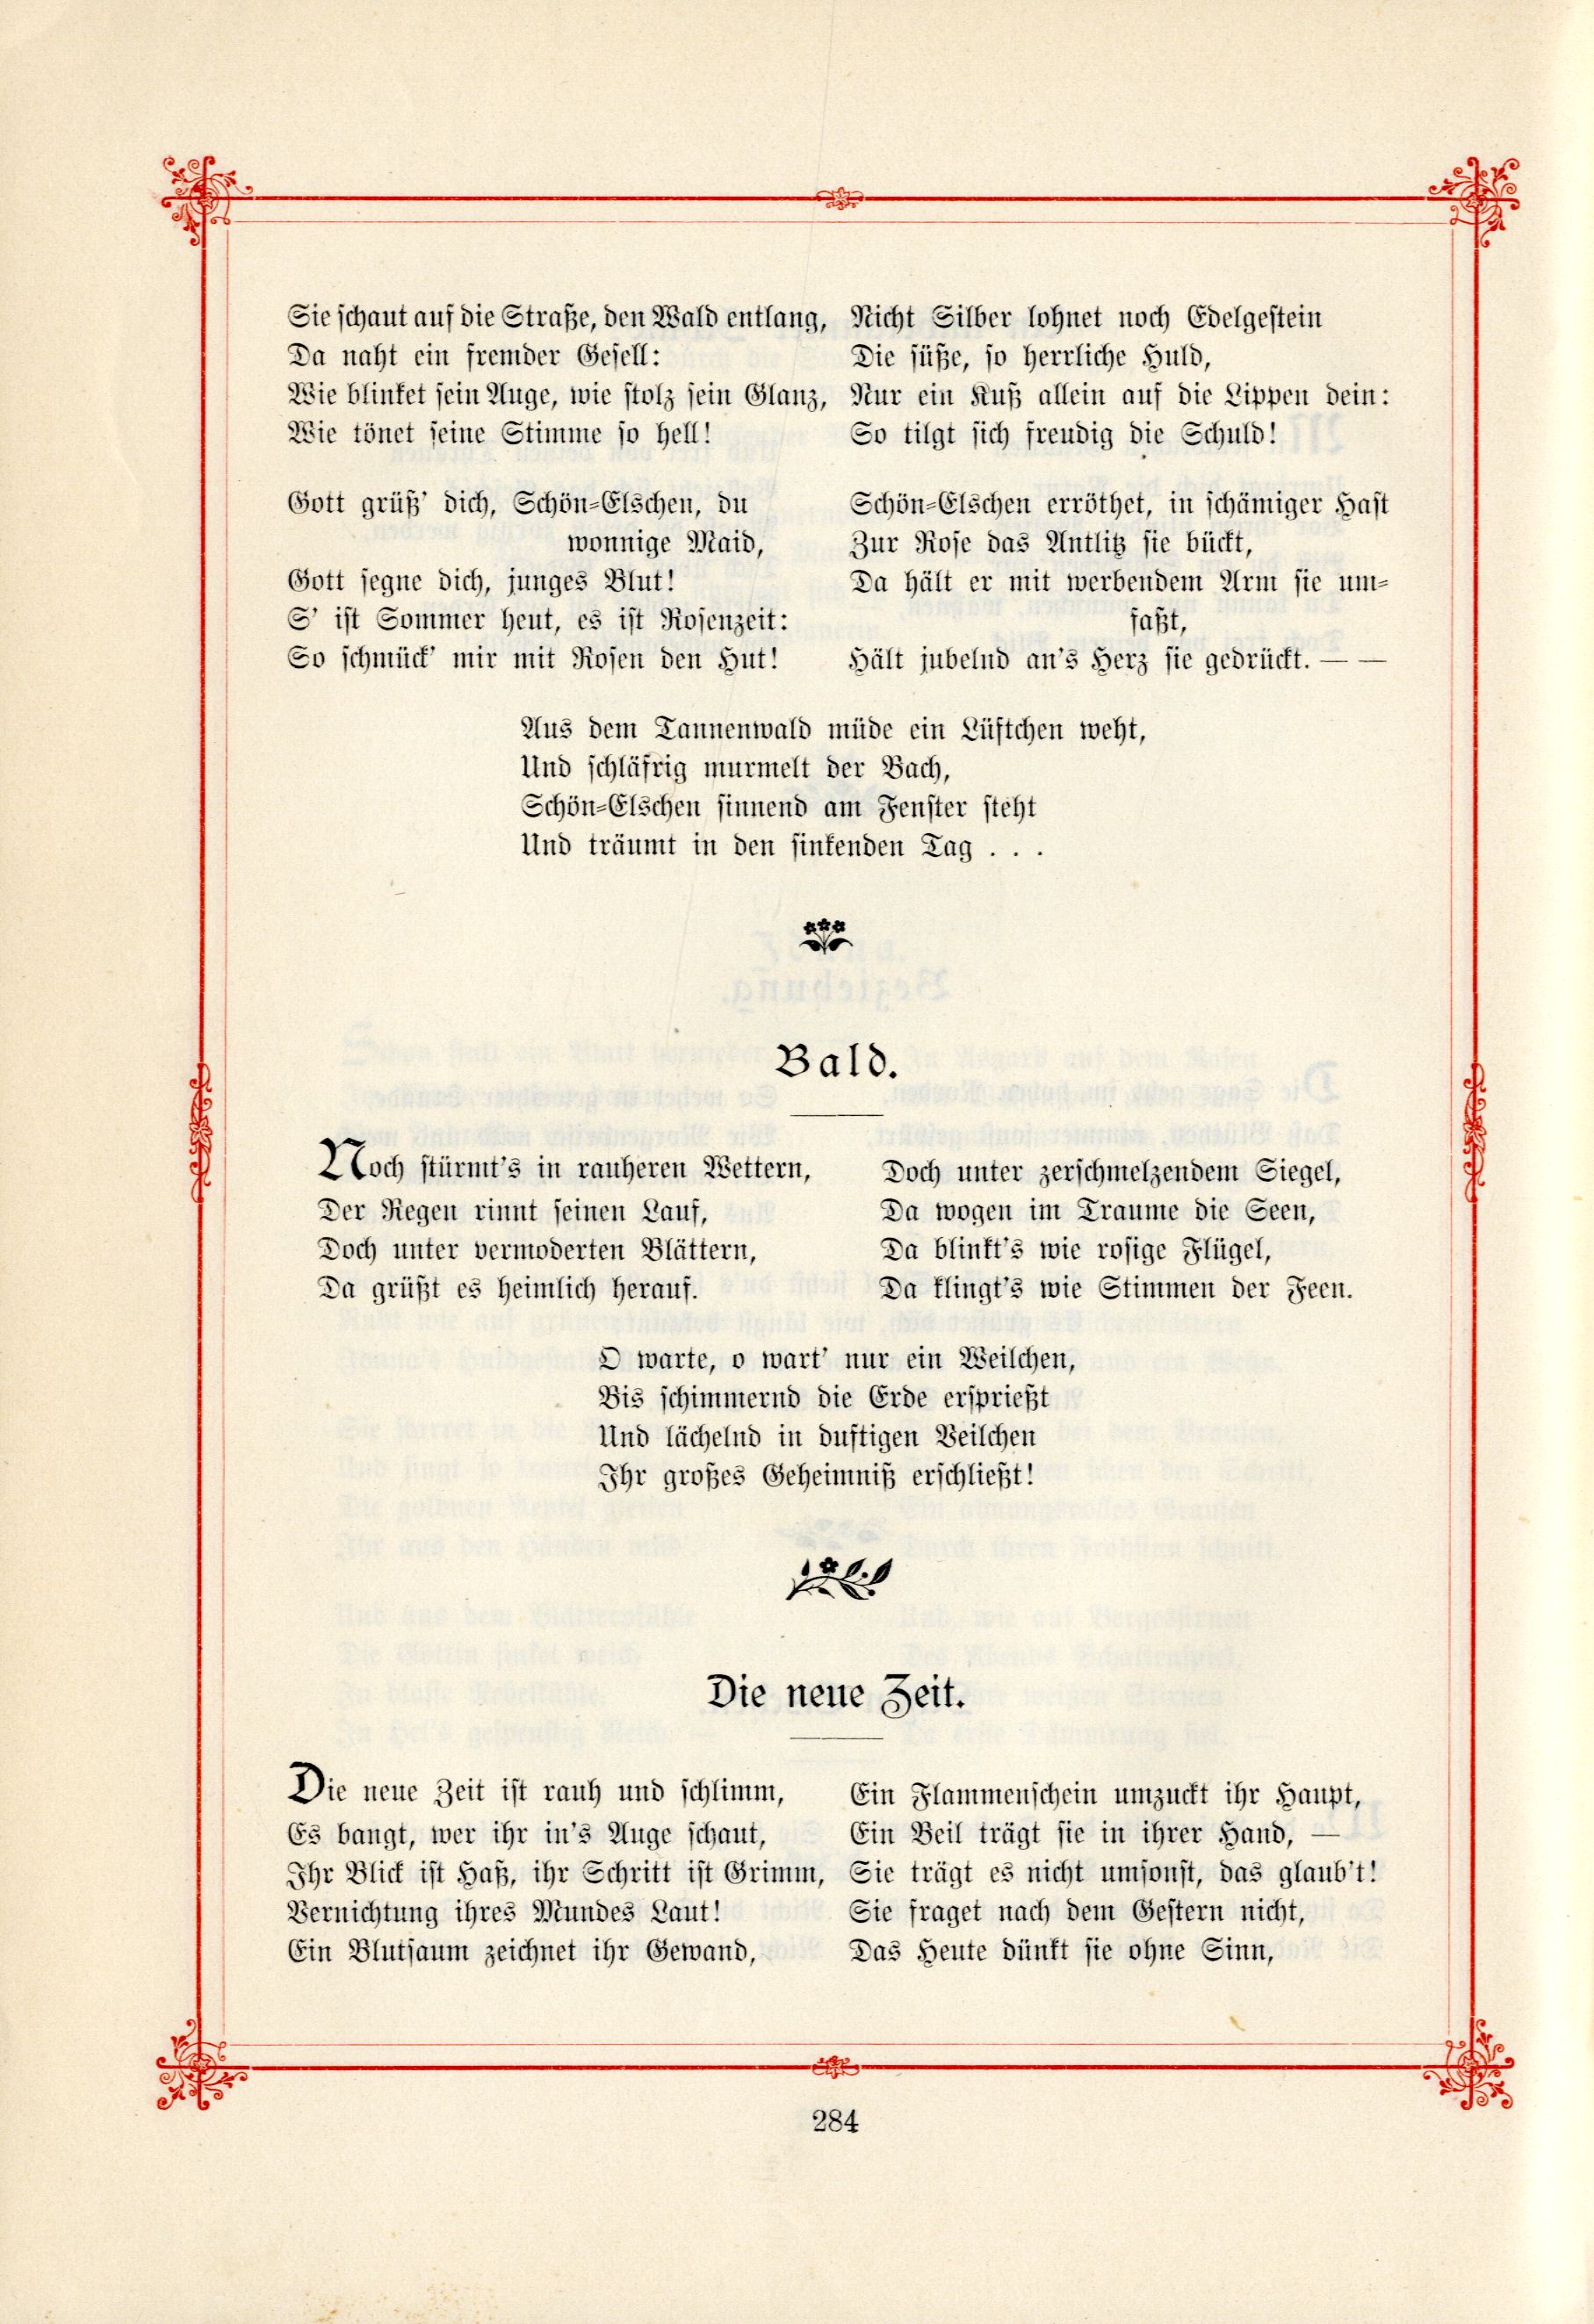 Die neue Zeit (1895) | 1. (284) Основной текст